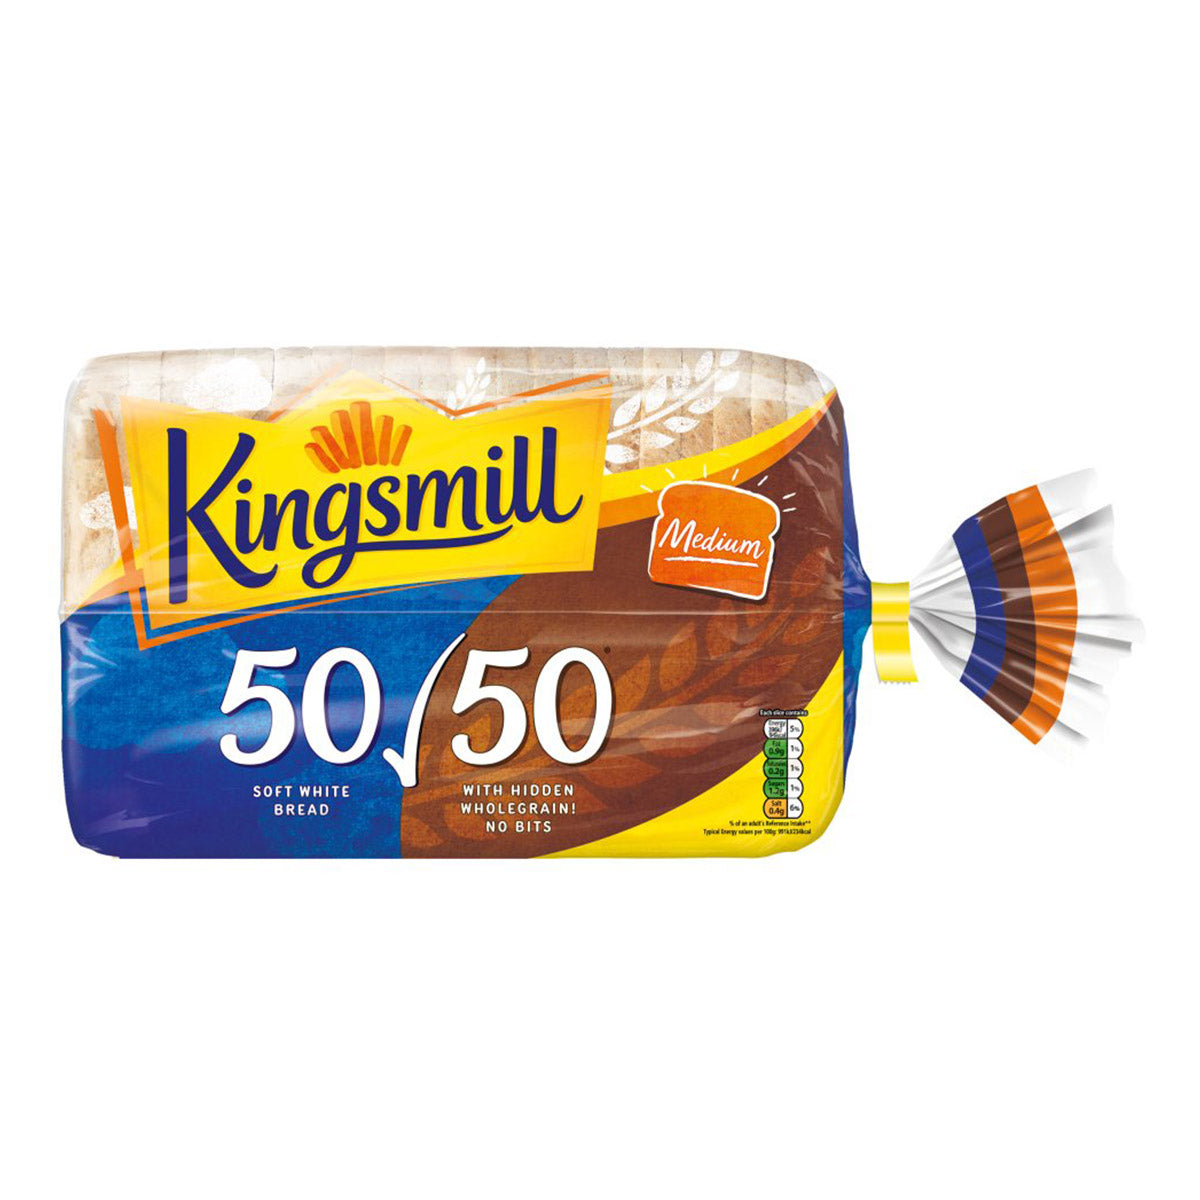 Kingsmill Medium 50/50 Sliced Bread - 800g white bread.